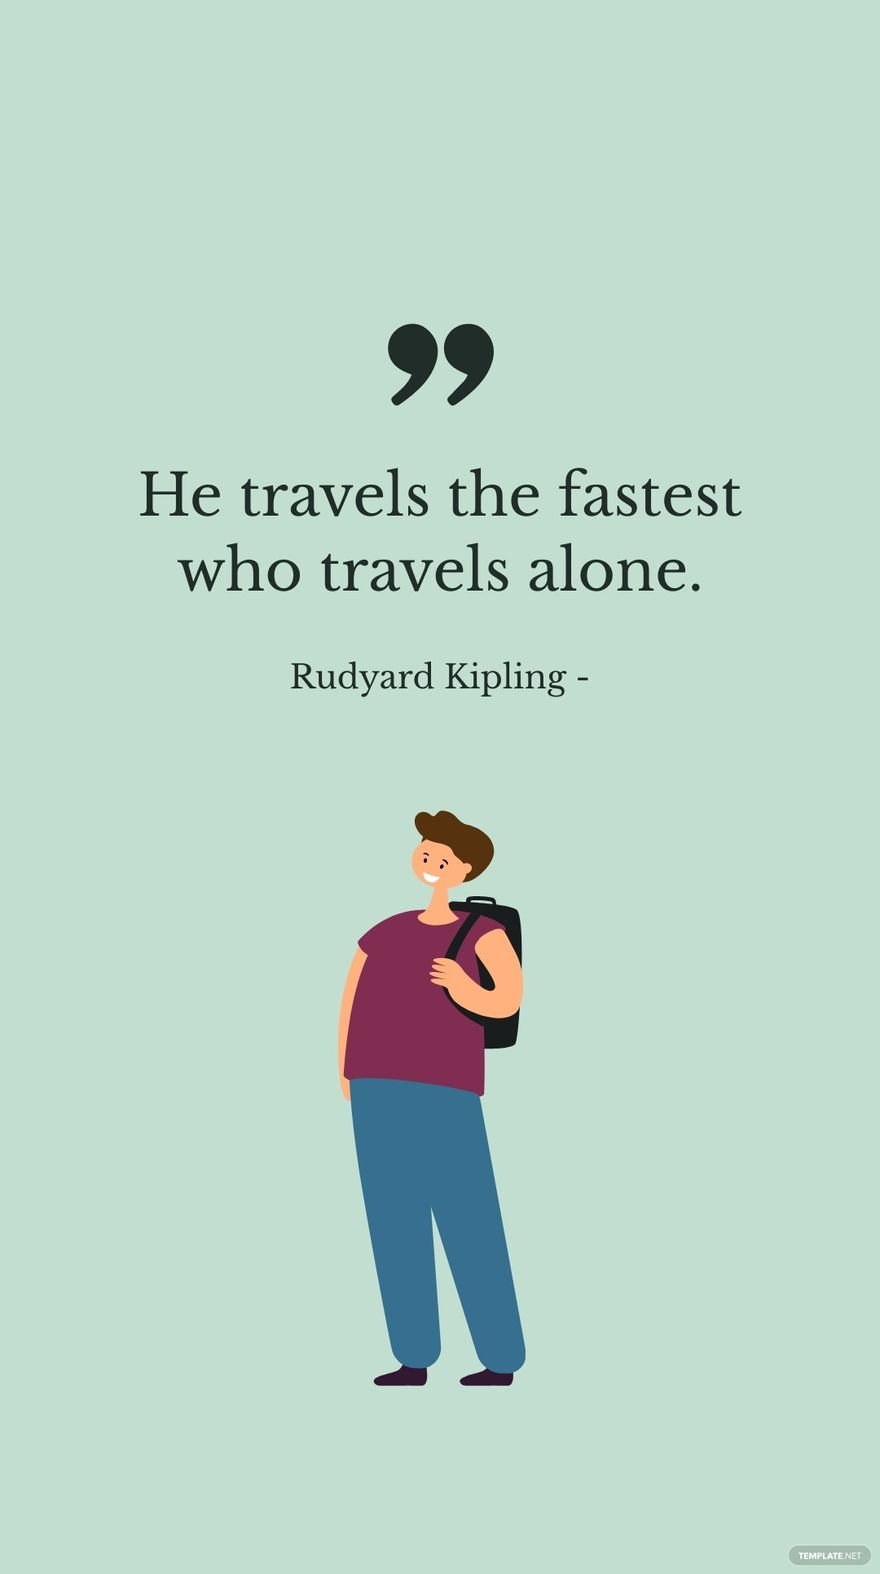 free-rudyard-kipling-he-travels-the-fastest-who-travels-alone-jpg-template